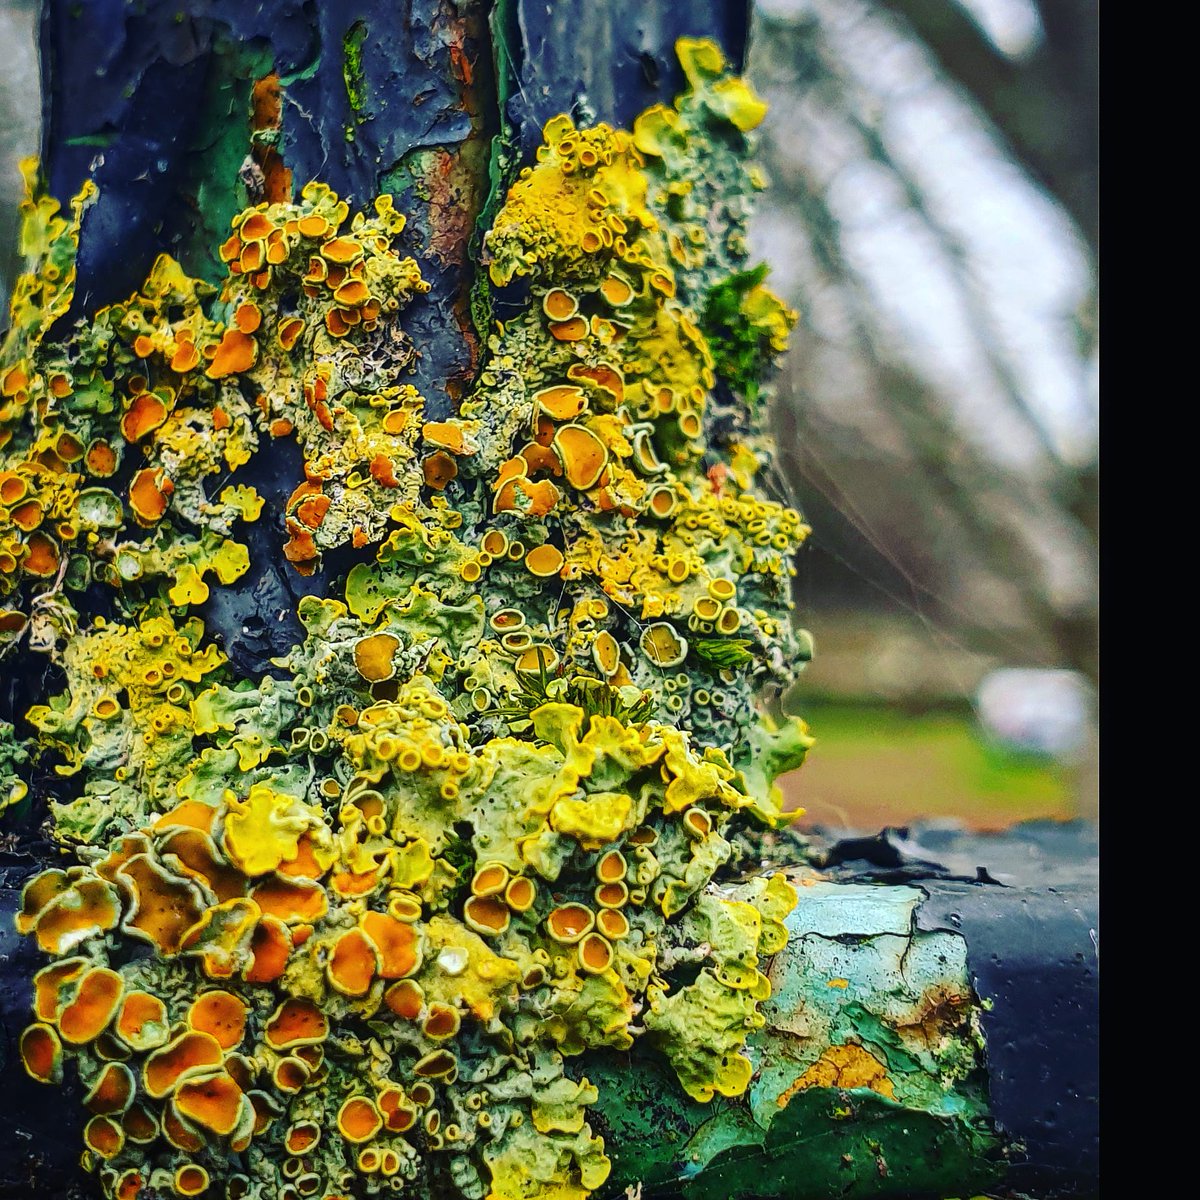 On the park railings, lichens gather in witness, along and beside. #nature #poetry #poetrycommunity  #poetrylovers #poems #urban   #poet #writingcommunity #photography #haiku  #haikupoem #haikupoetry